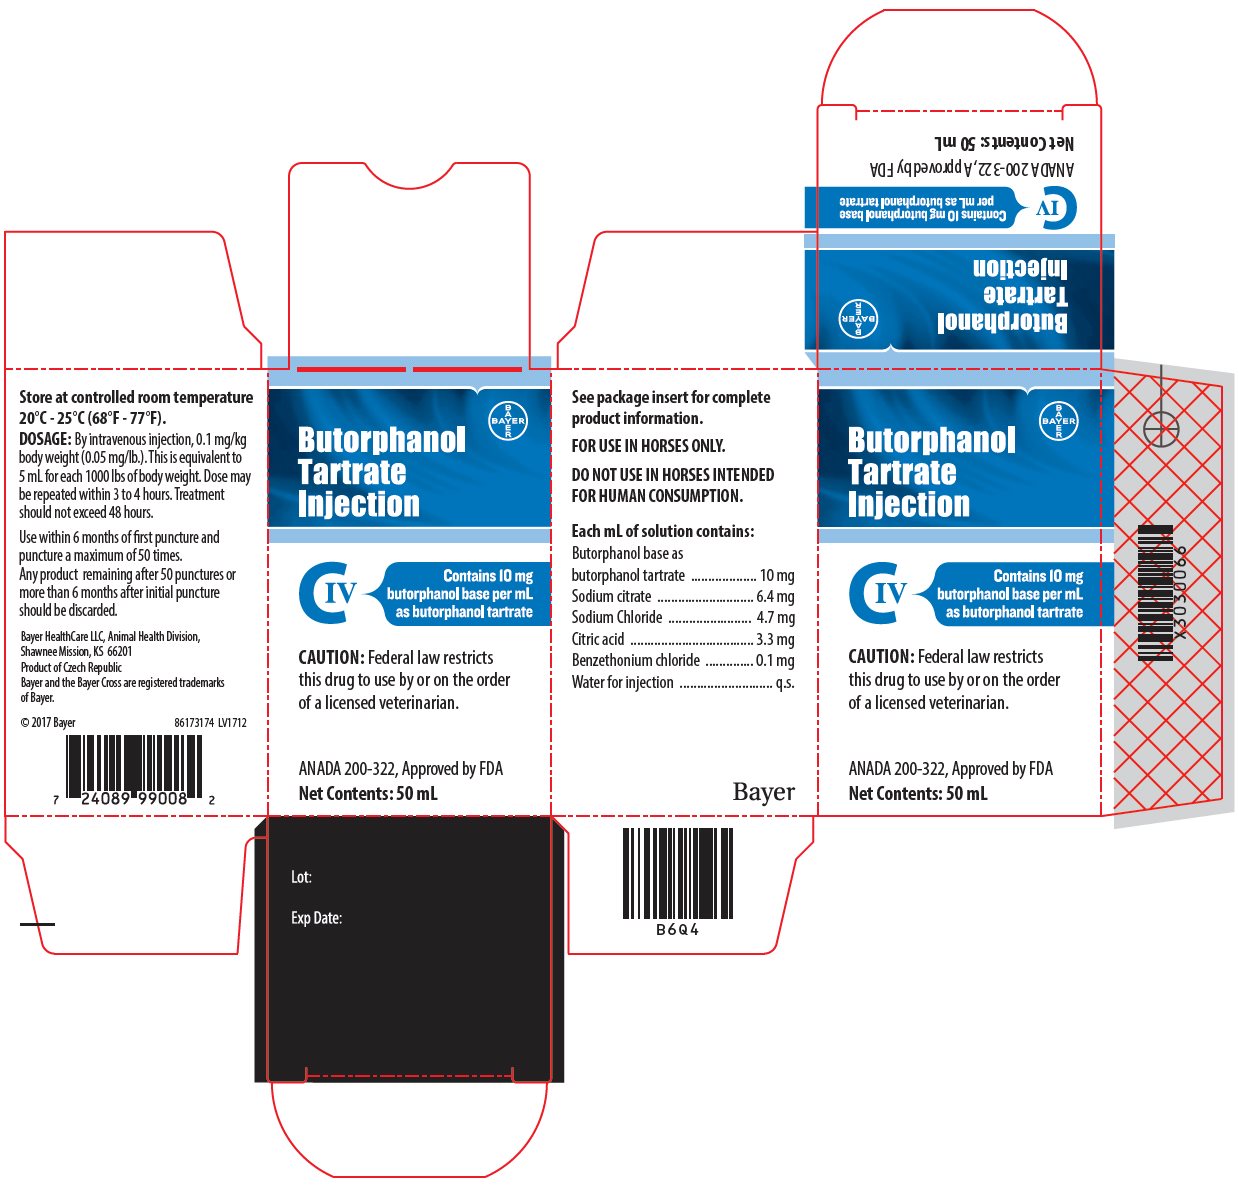 Butorphanol Tartrate Injection carton label